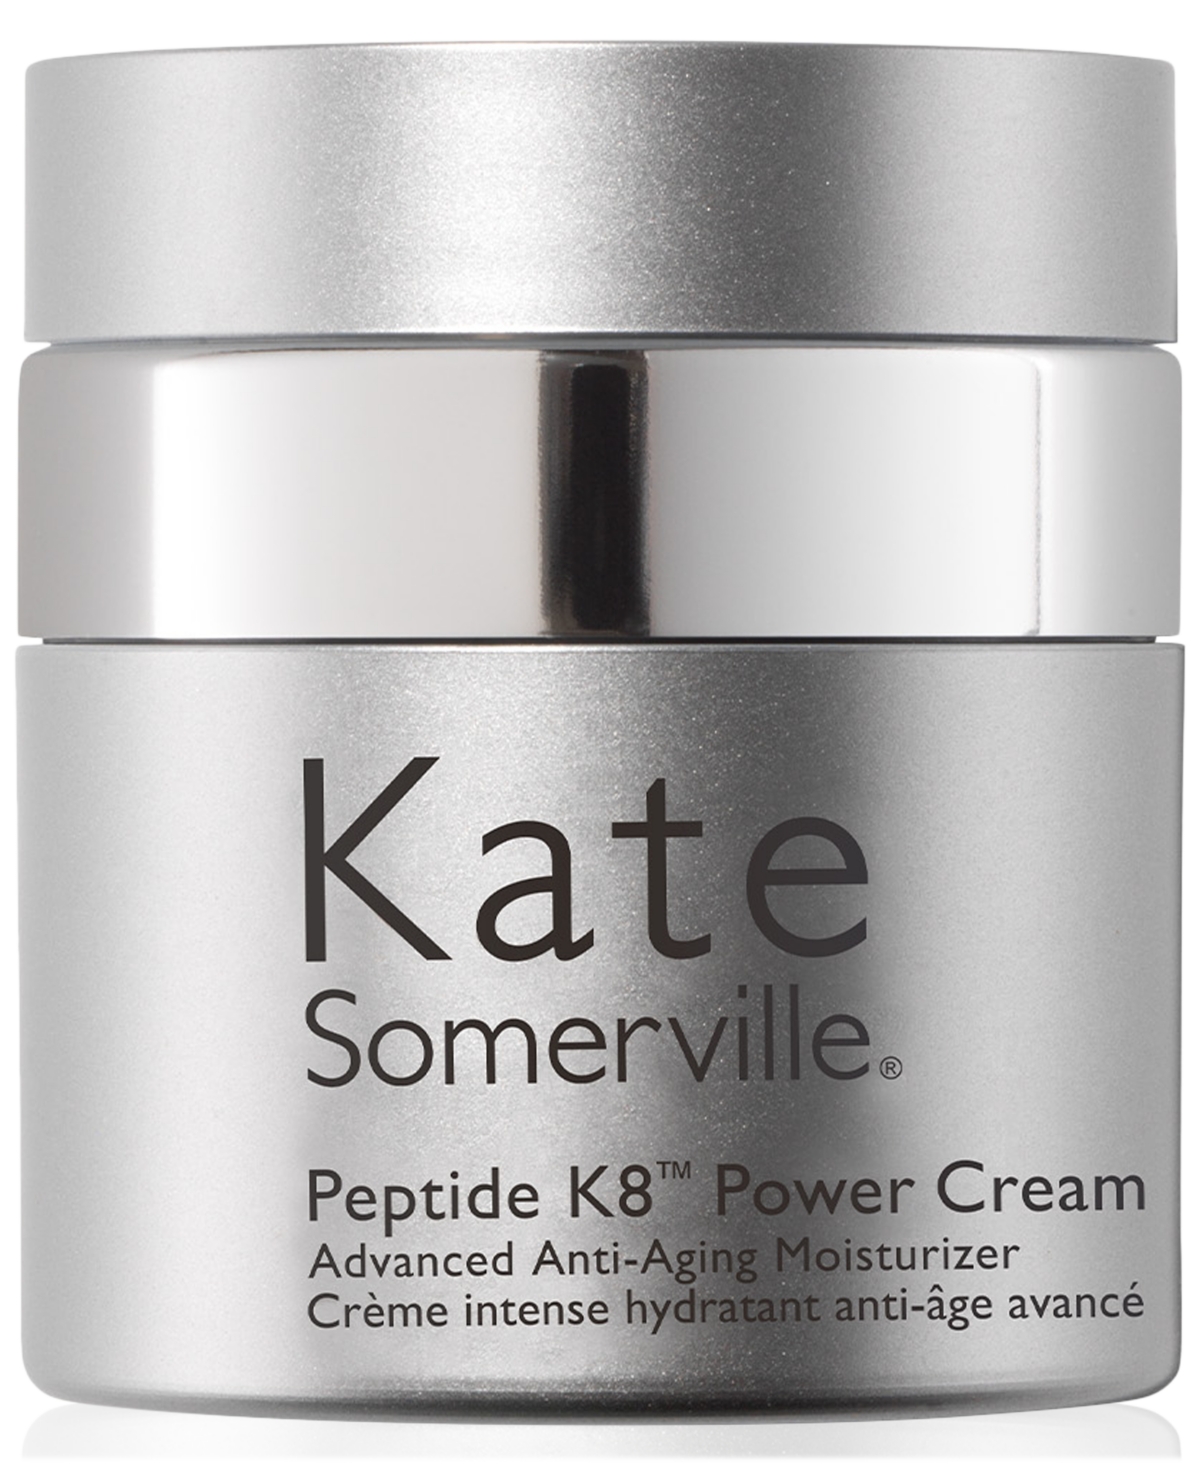 Peptide K8 Power Cream, 1 oz.